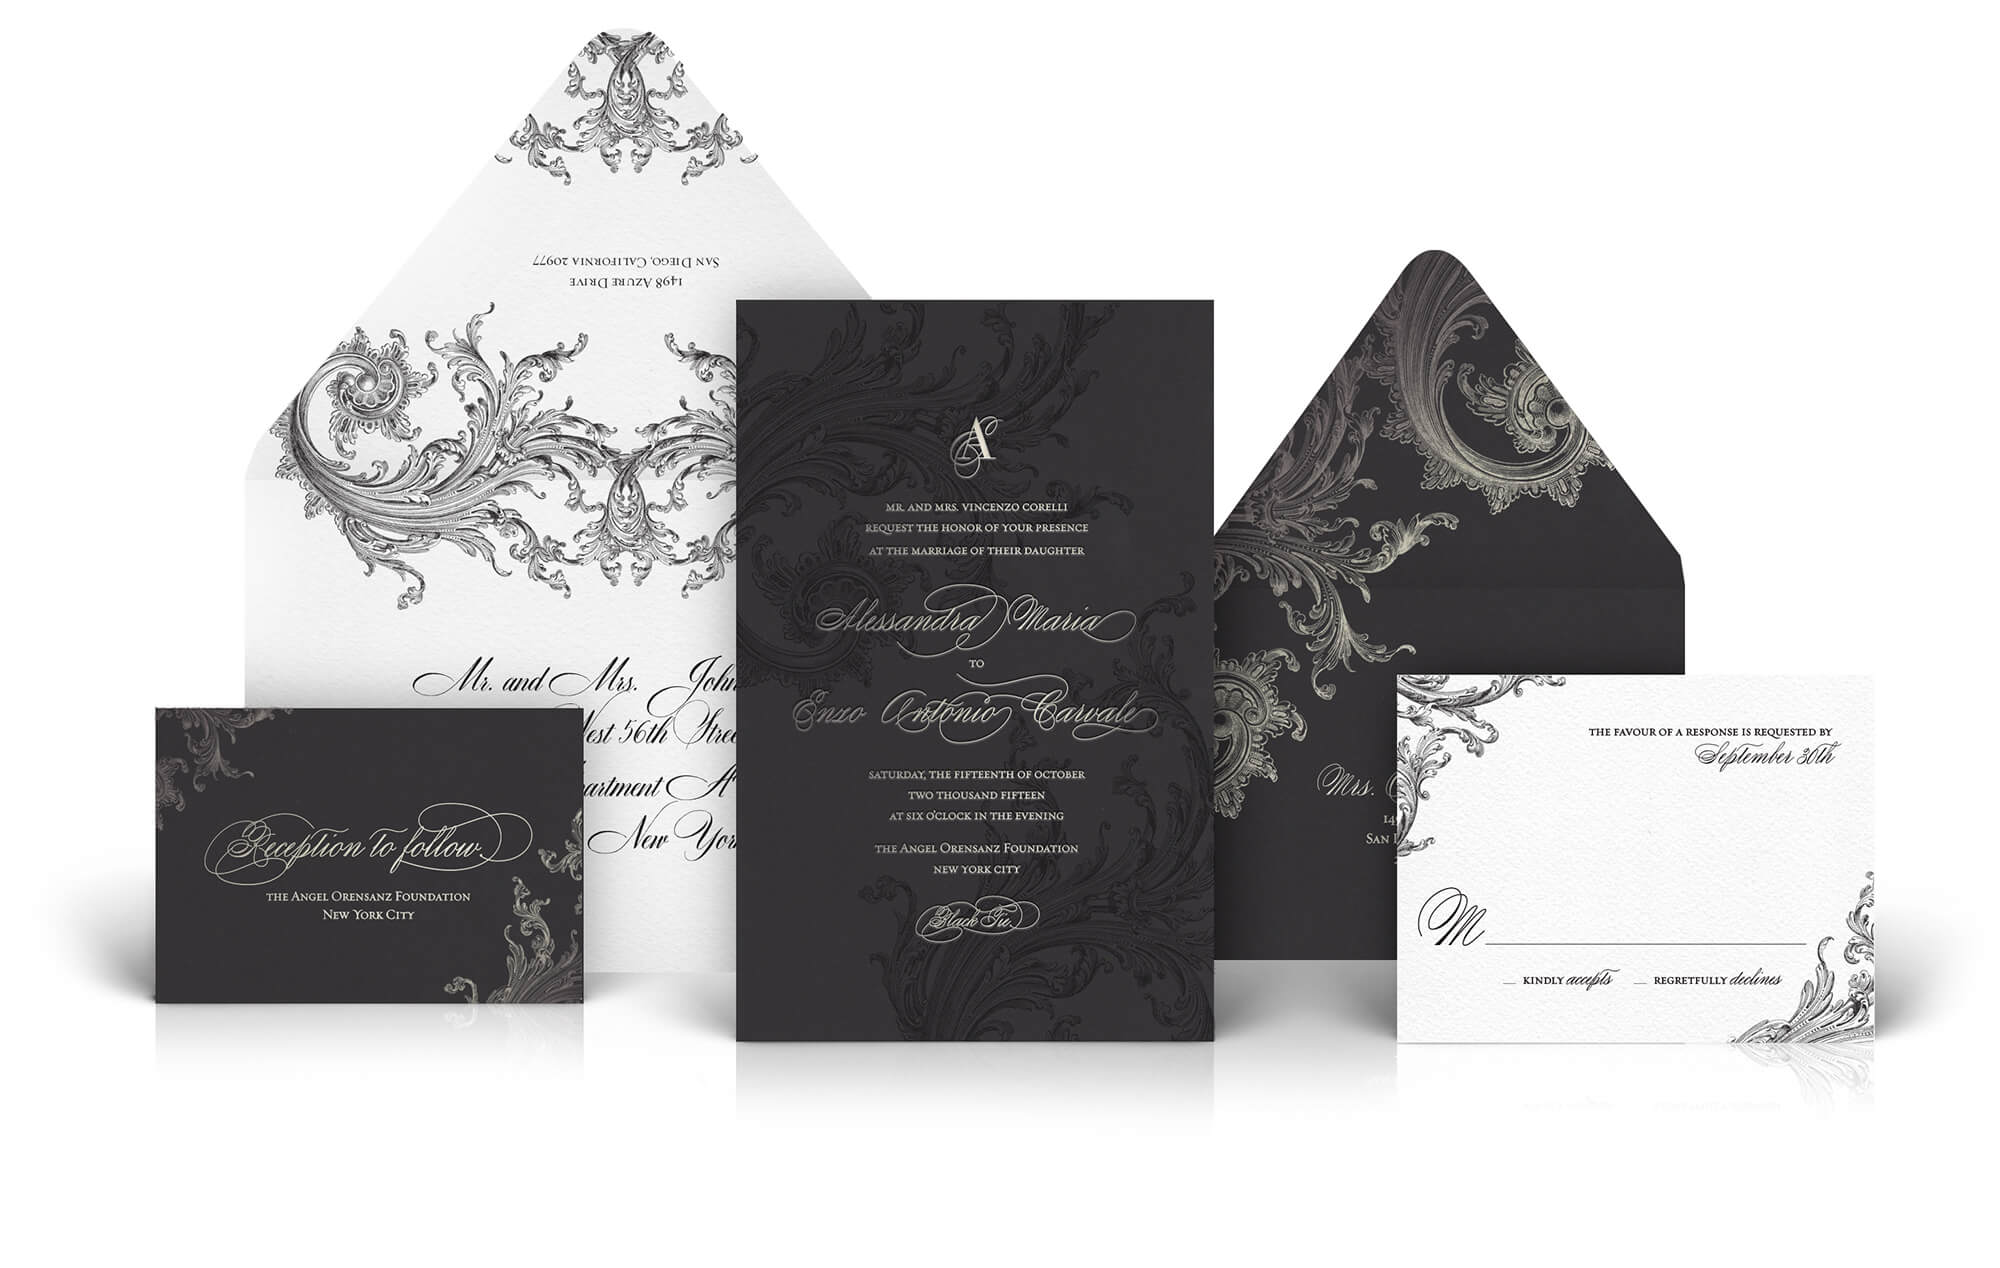 Ornate black and silver letterpress wedding invitation